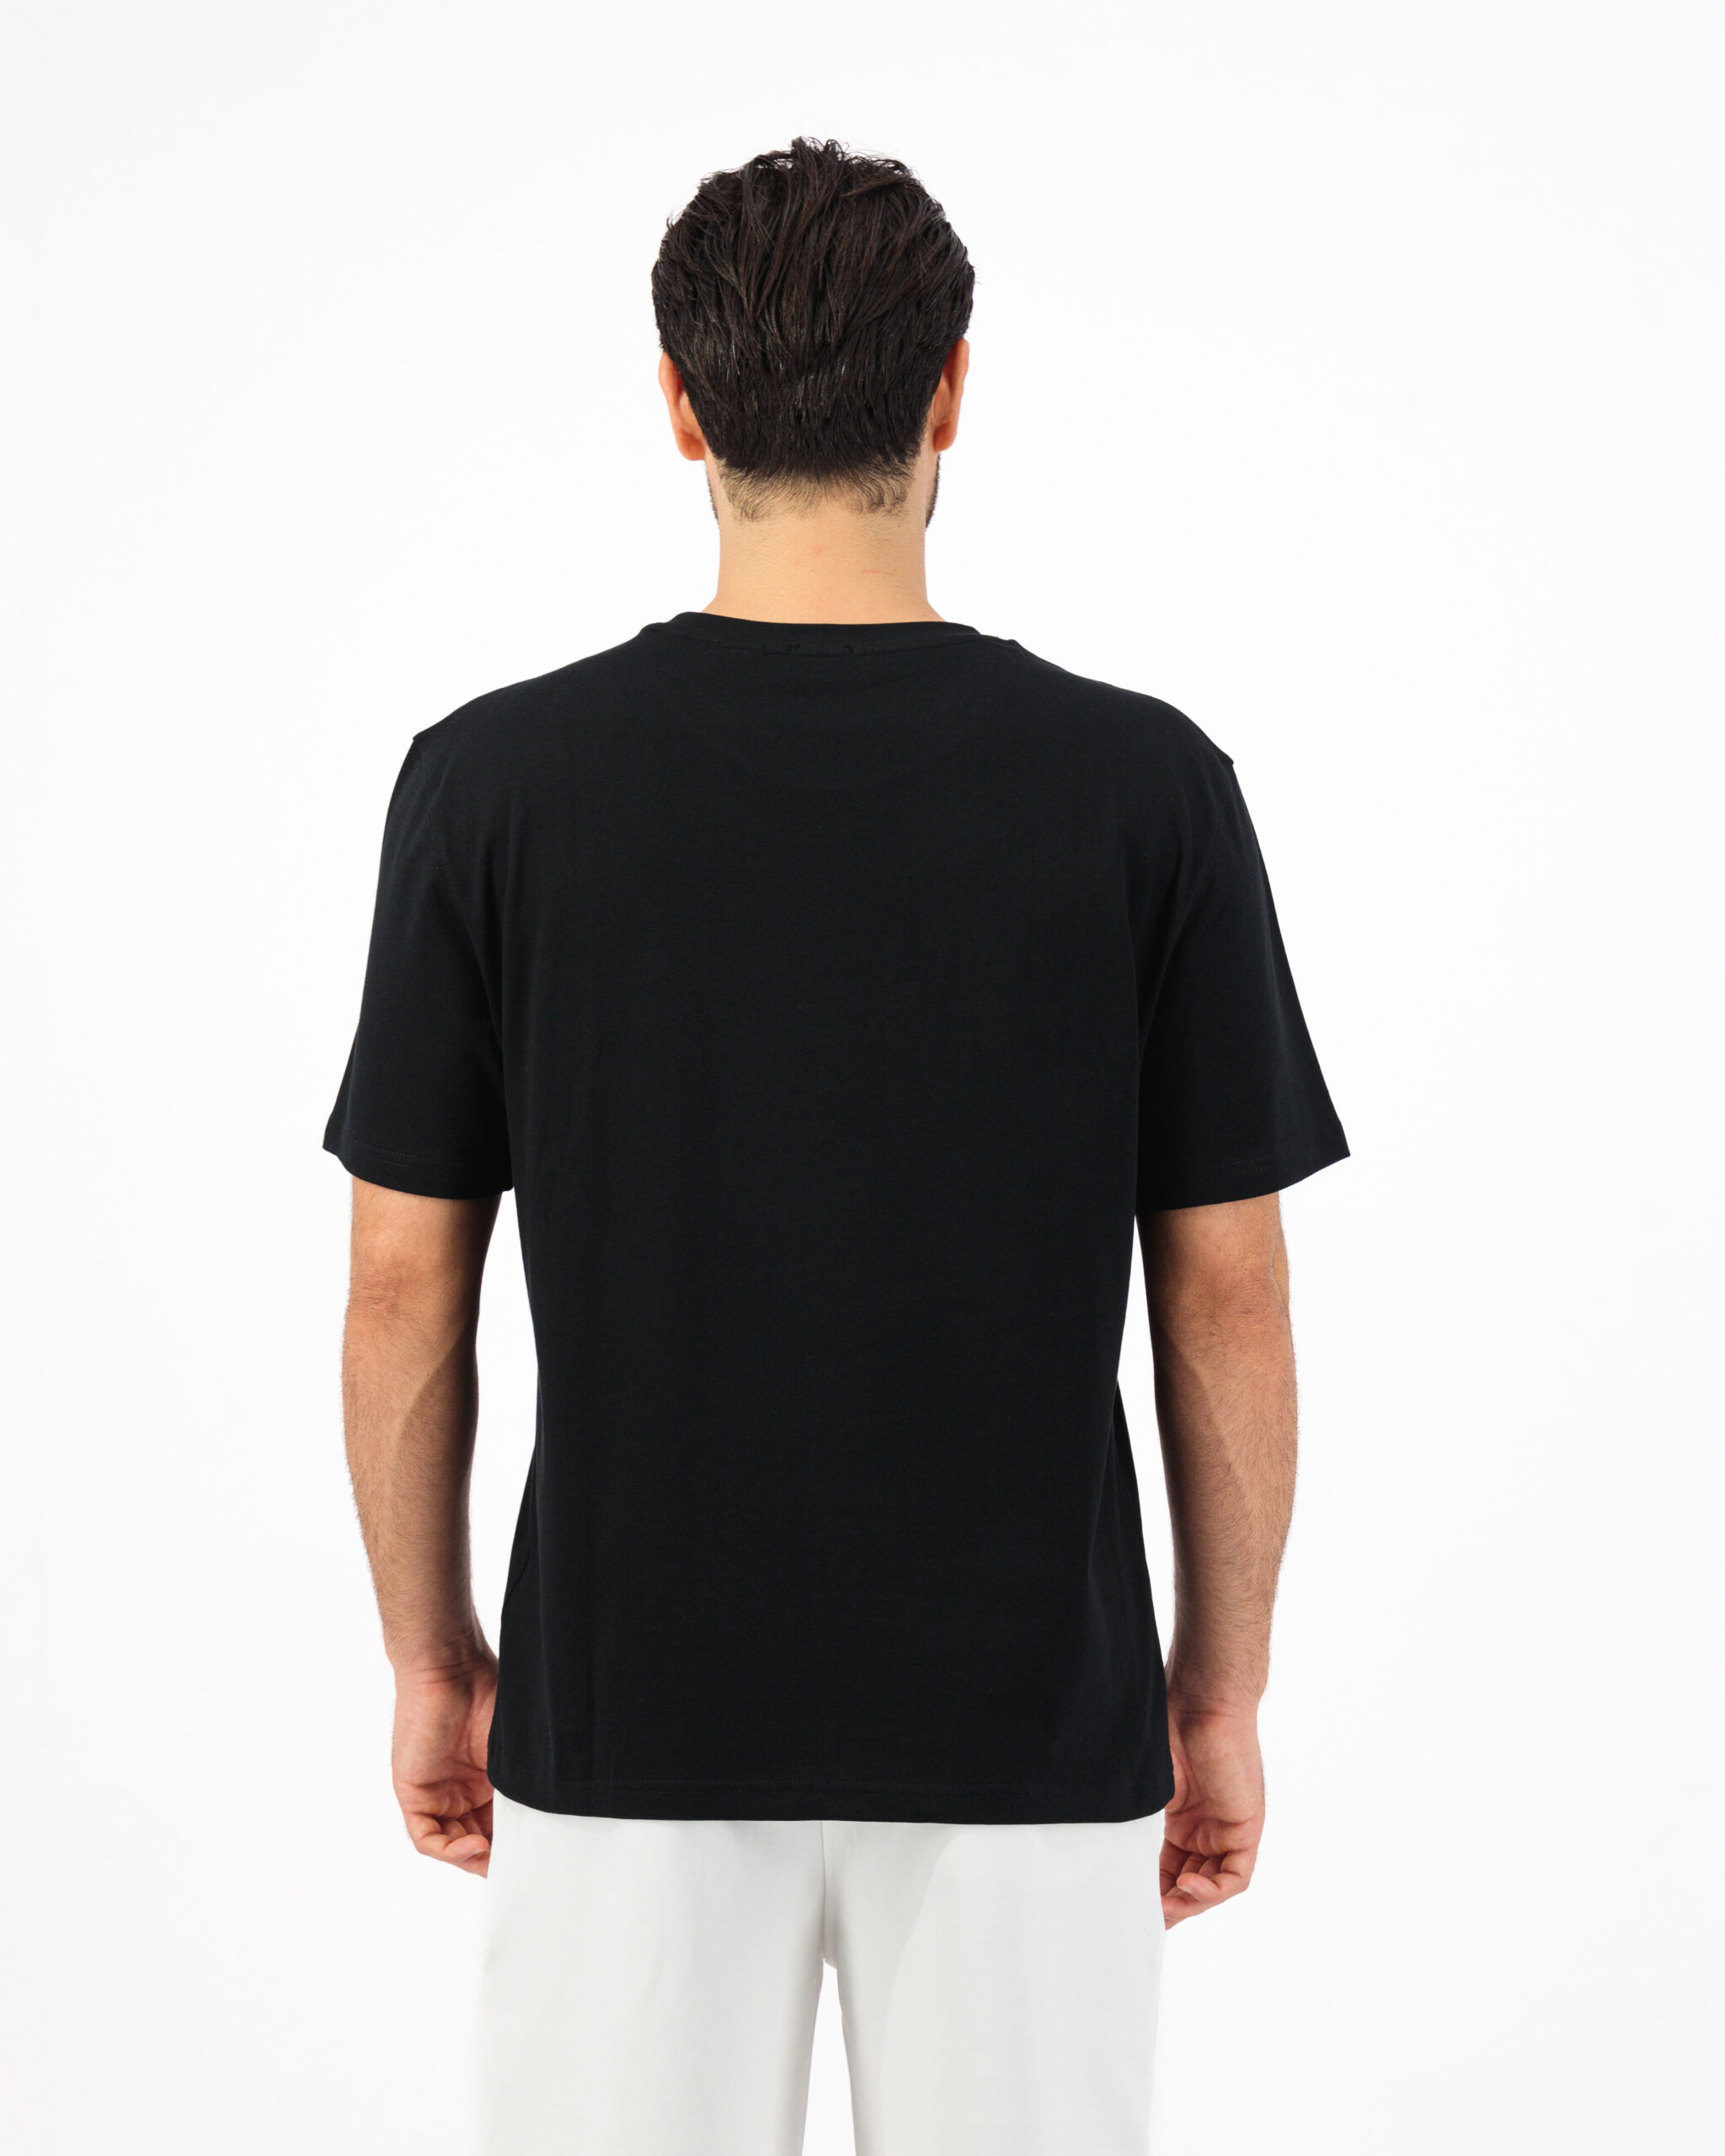 Black T-Shirt Slim Fit Camel Brand